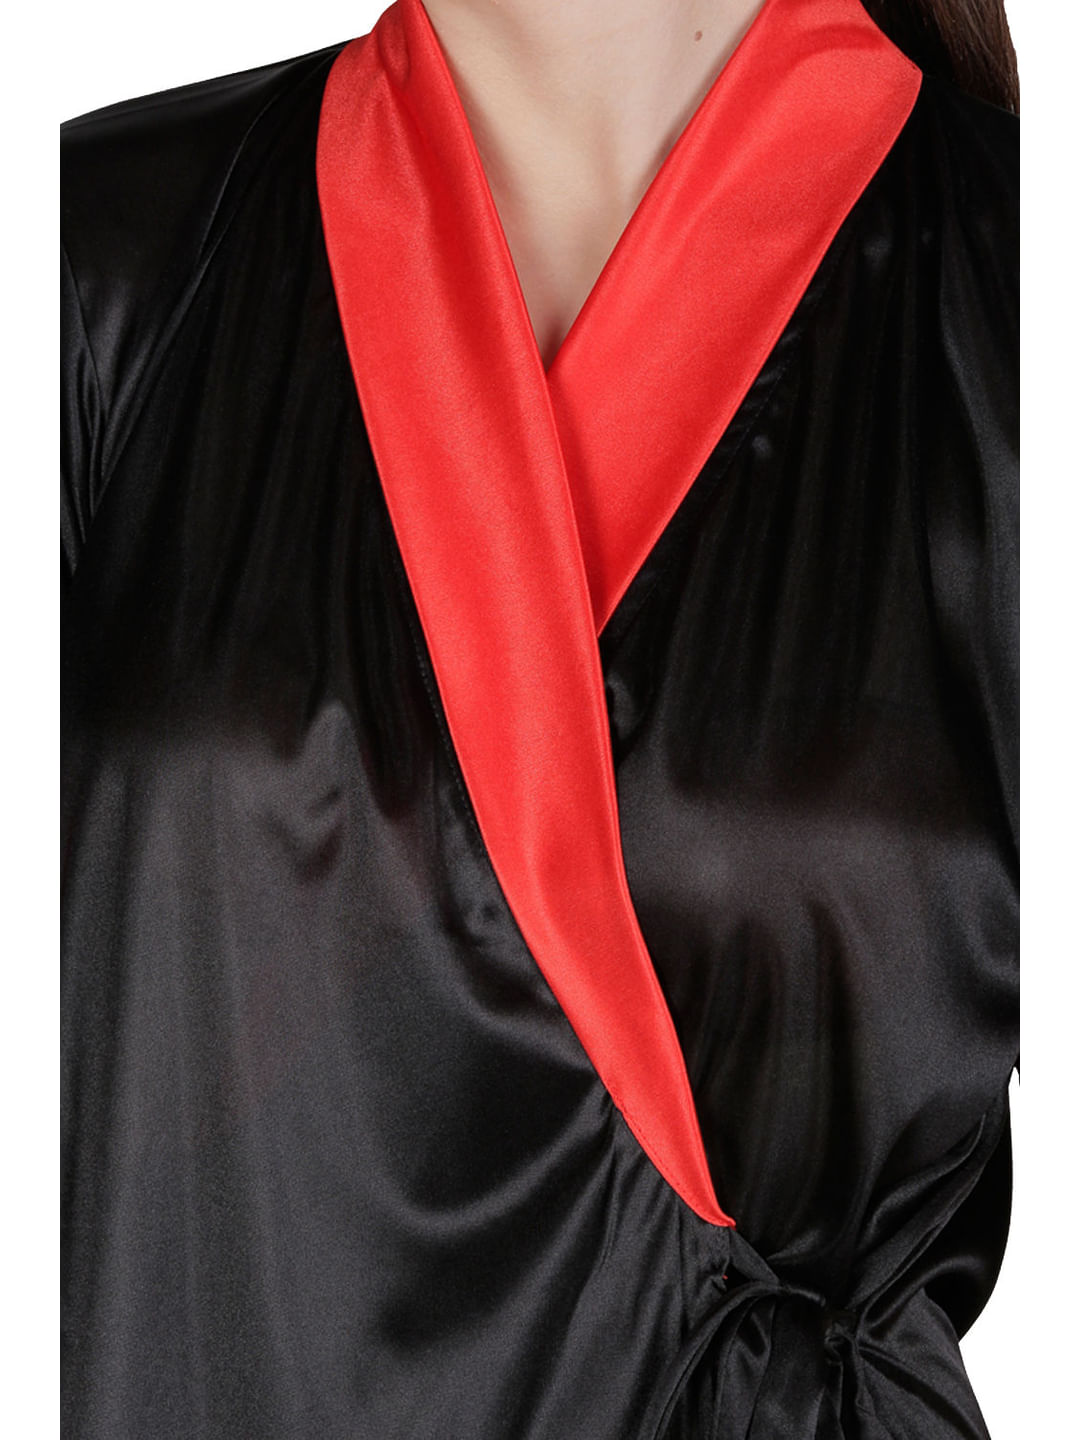 Secret Wish Women's Satin Red, Black Robe, Housecoat (Free Size, HC-52)